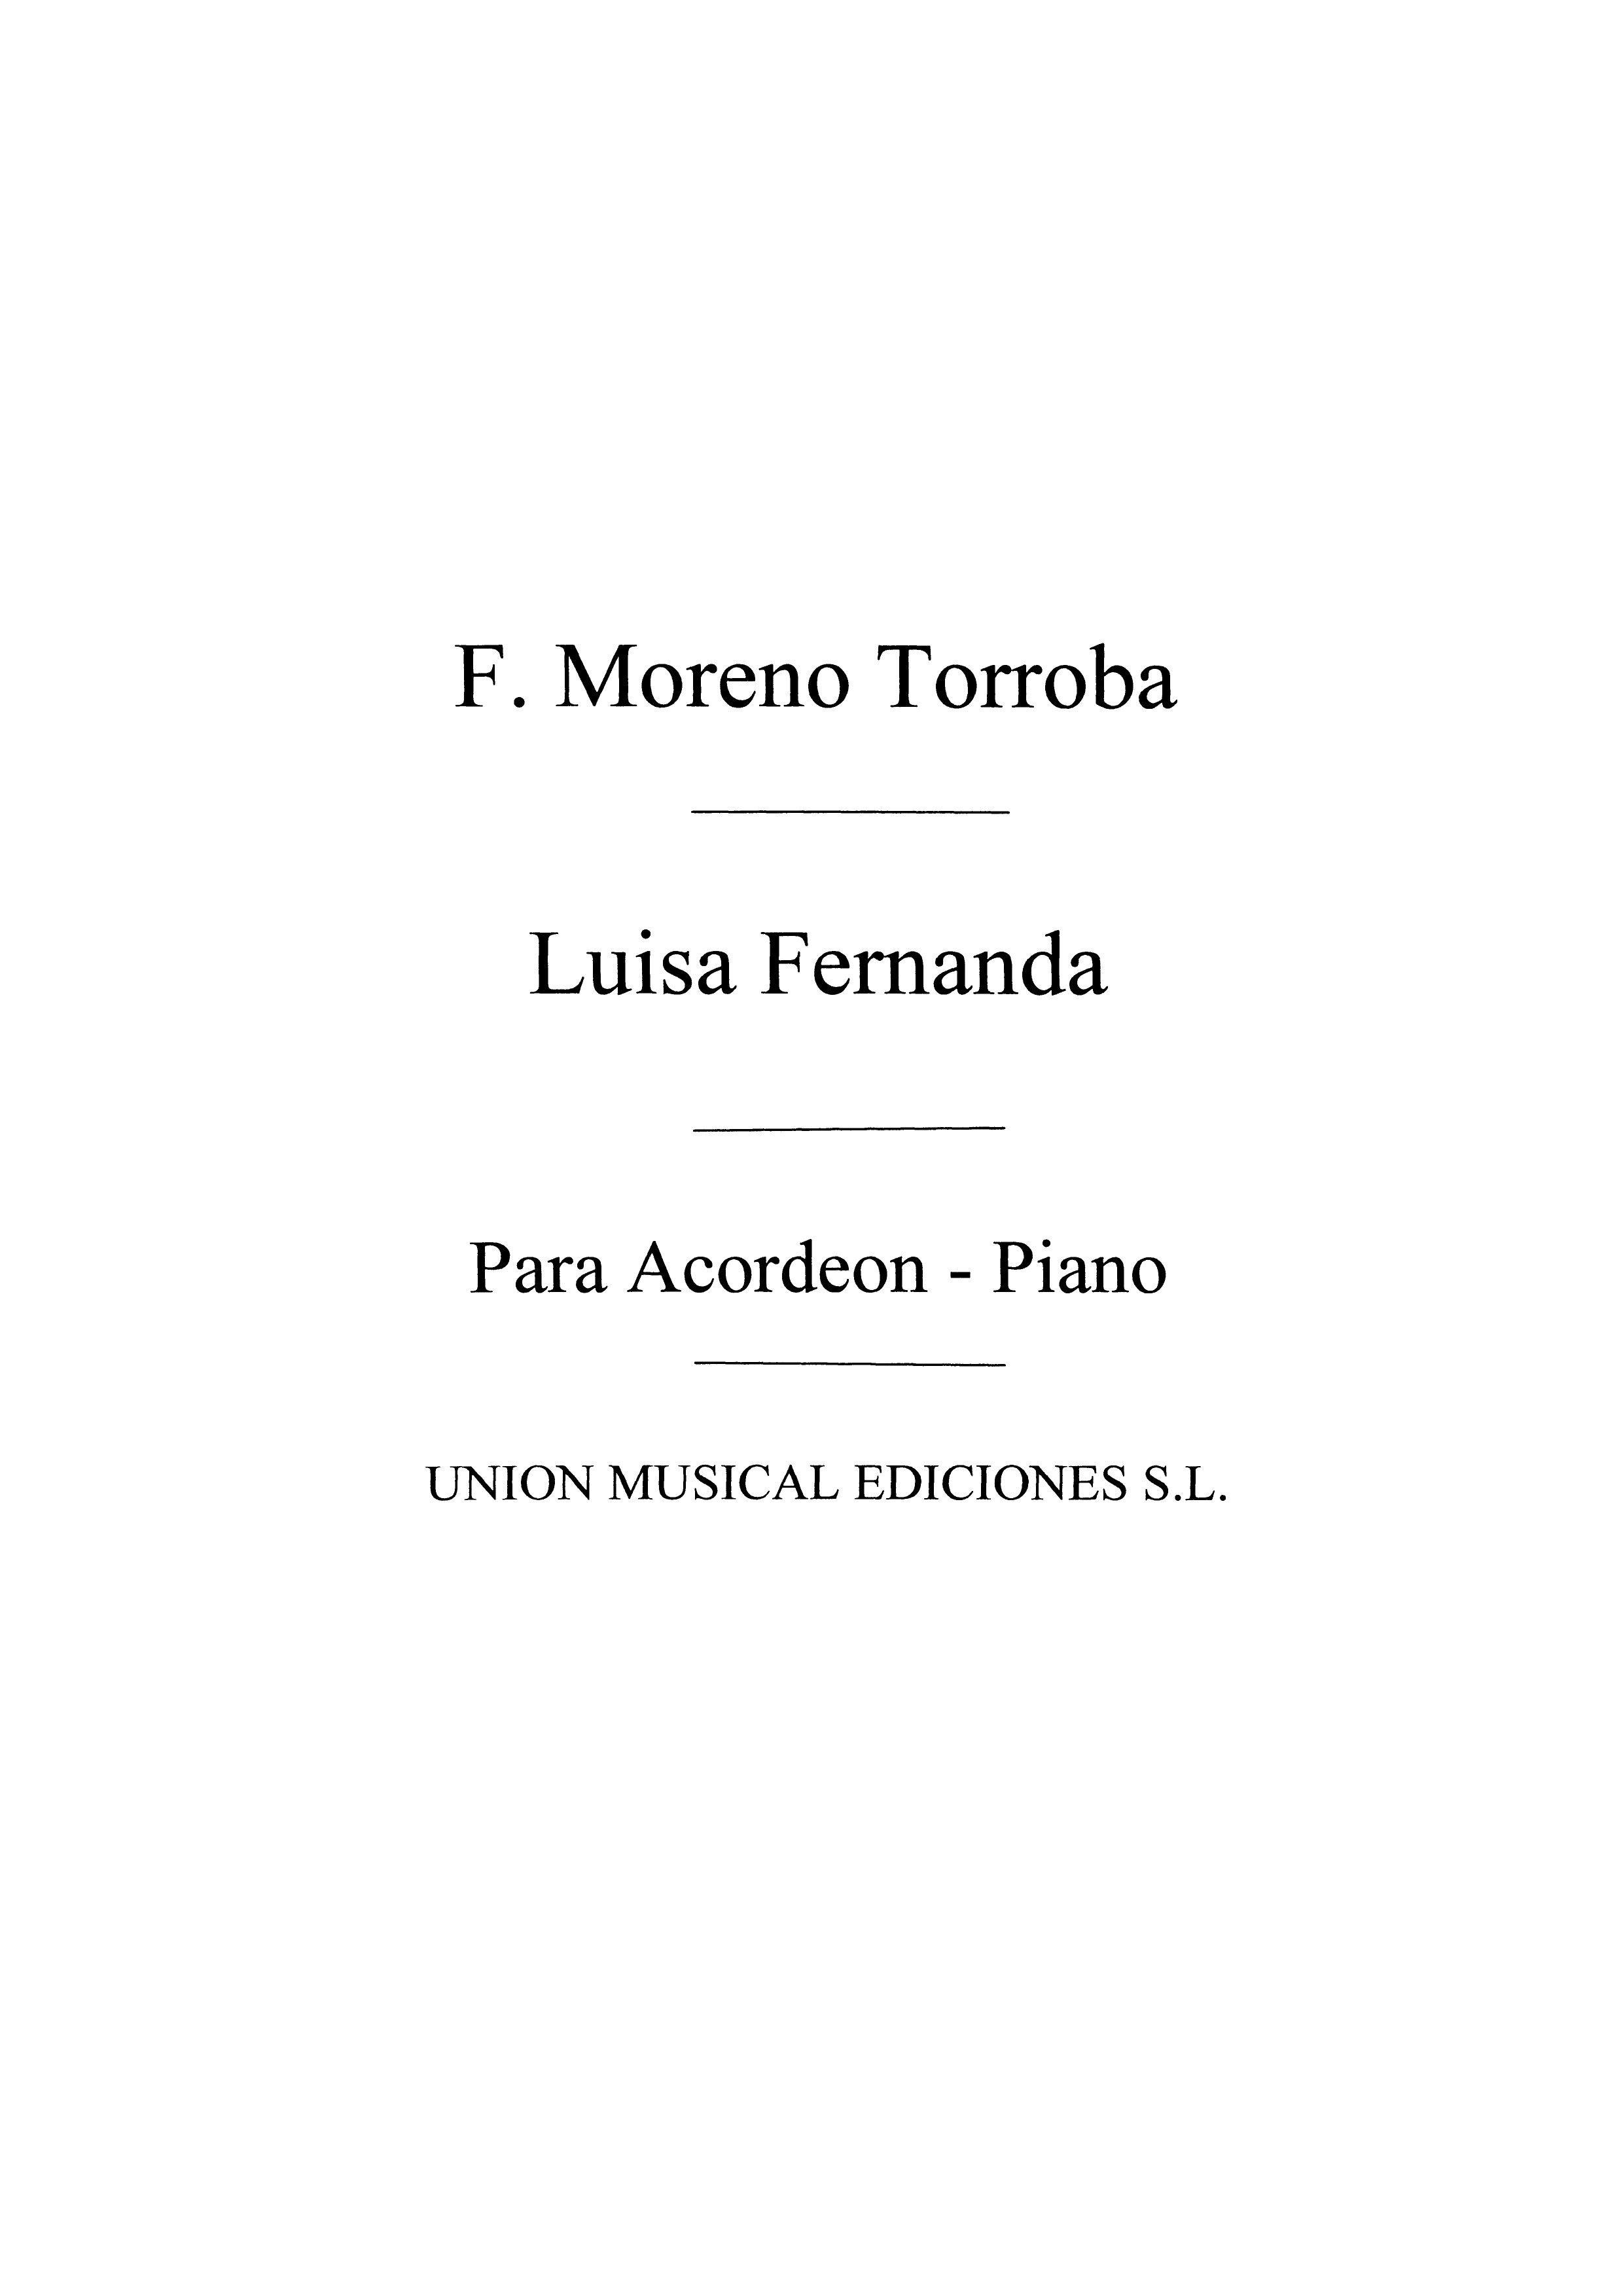 Moreno Torroba: Luisa Fernanda,(Biok) Seleccion for Accordion